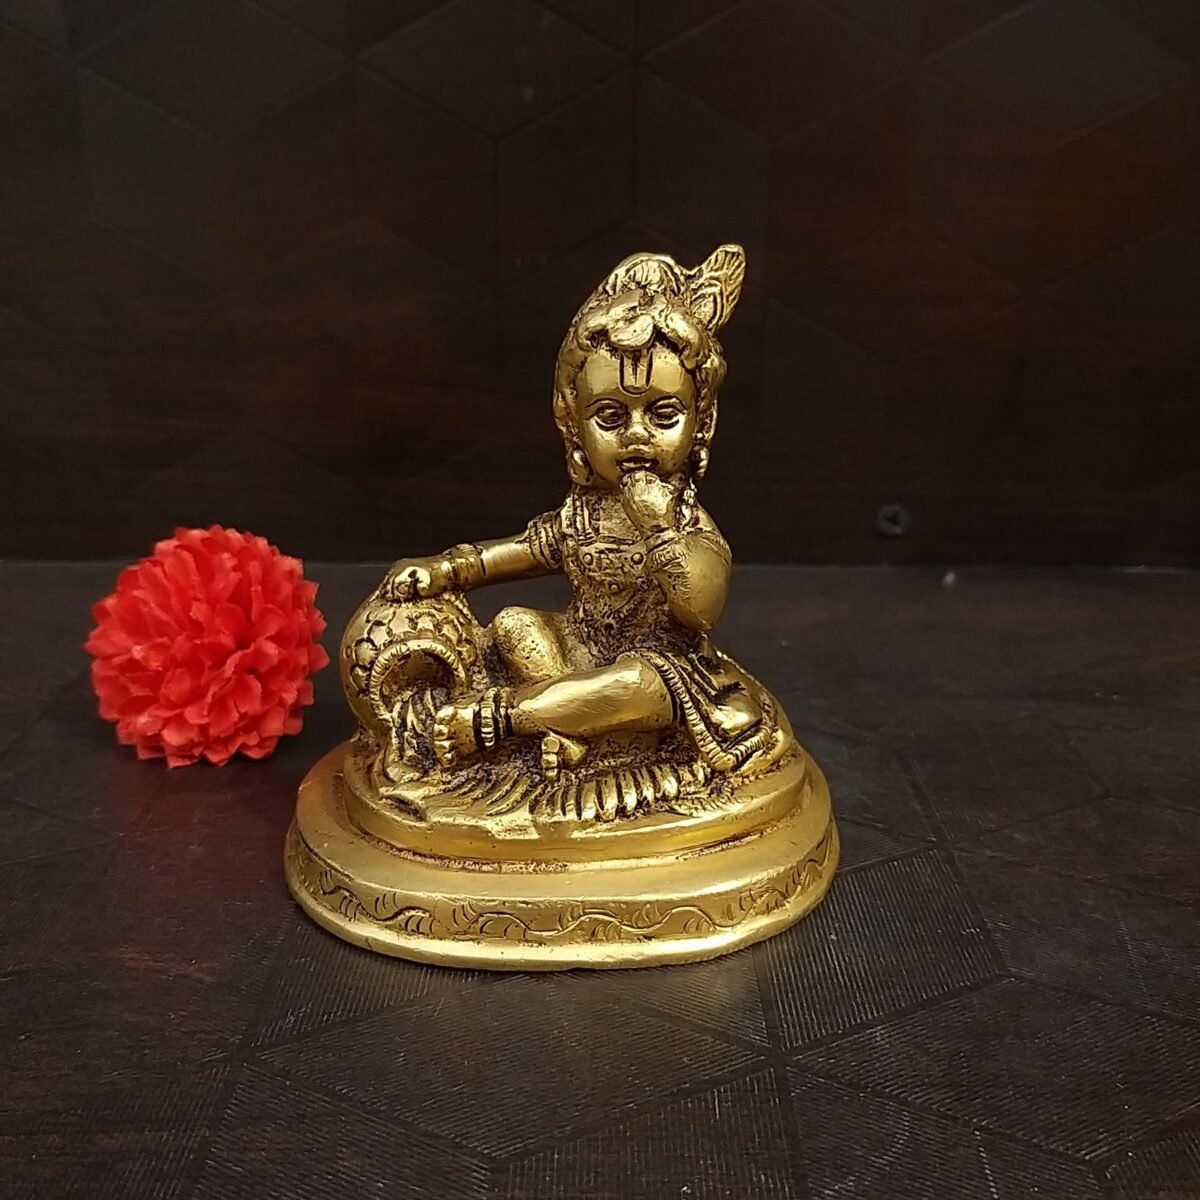 vennai krishna idol home decor pooja items hindu god statues gift buy online 6008